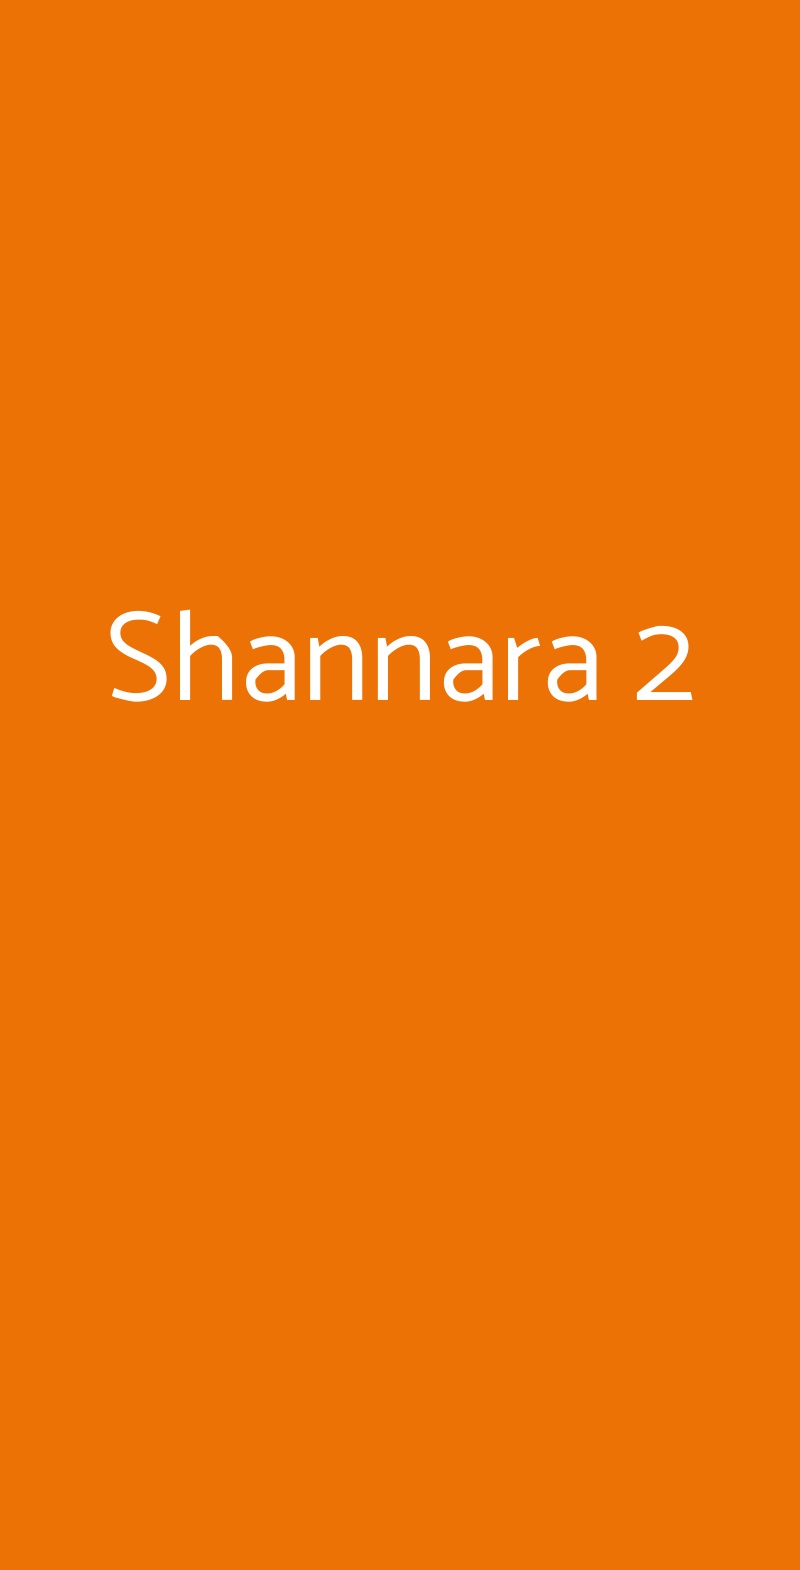 Shannara 2 Milano menù 1 pagina